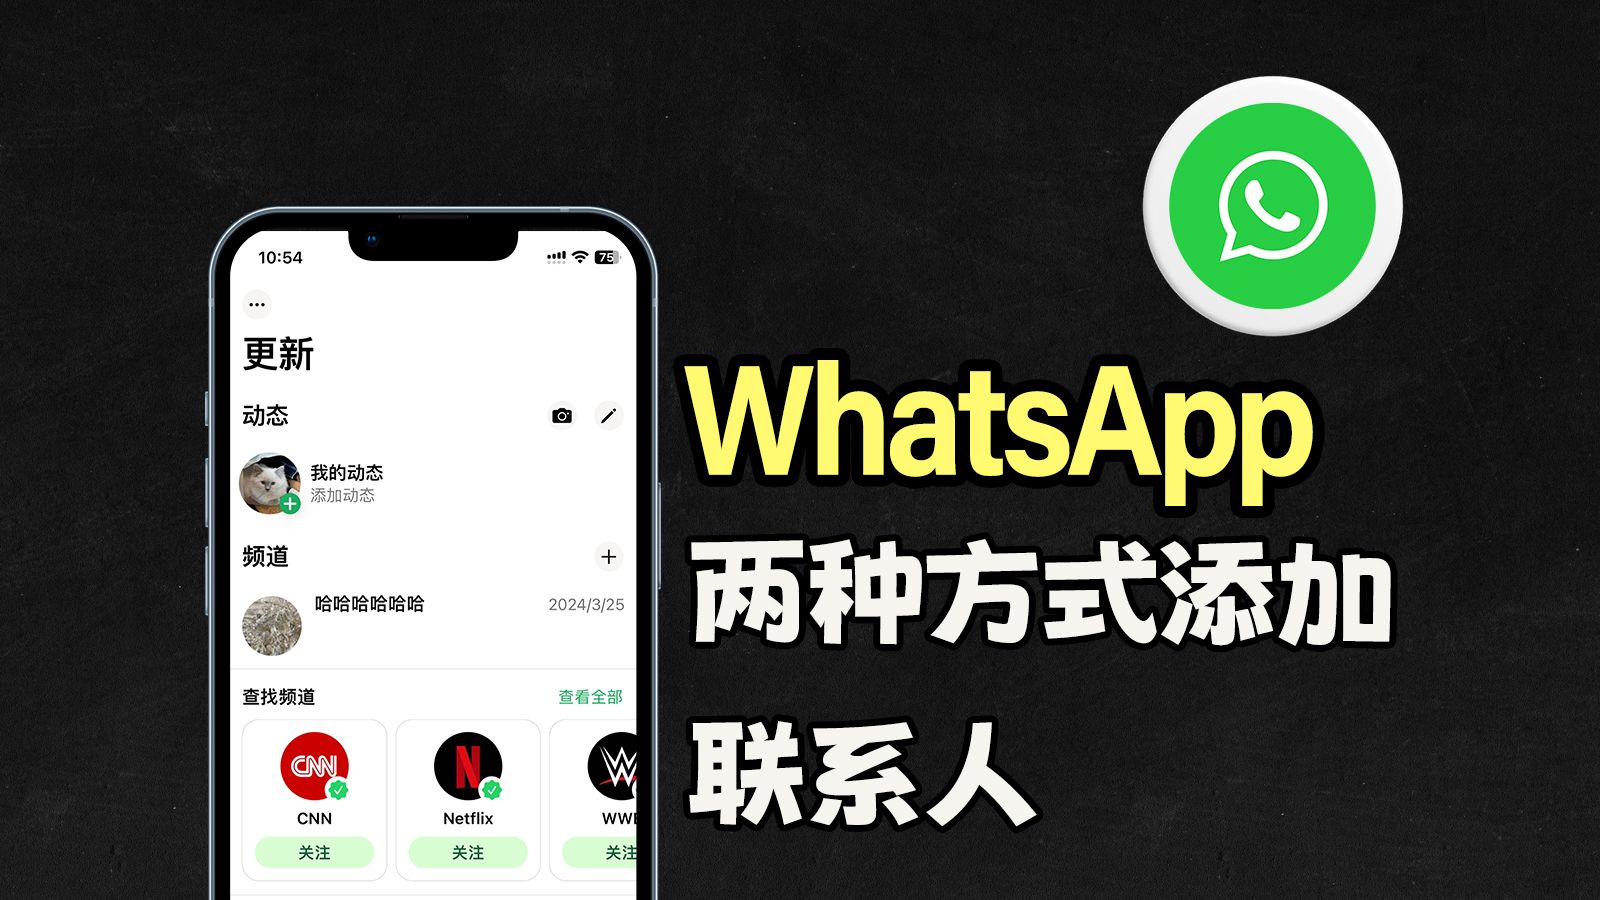 whatsapp_whatsapp是什么_whatsapp如何聊天